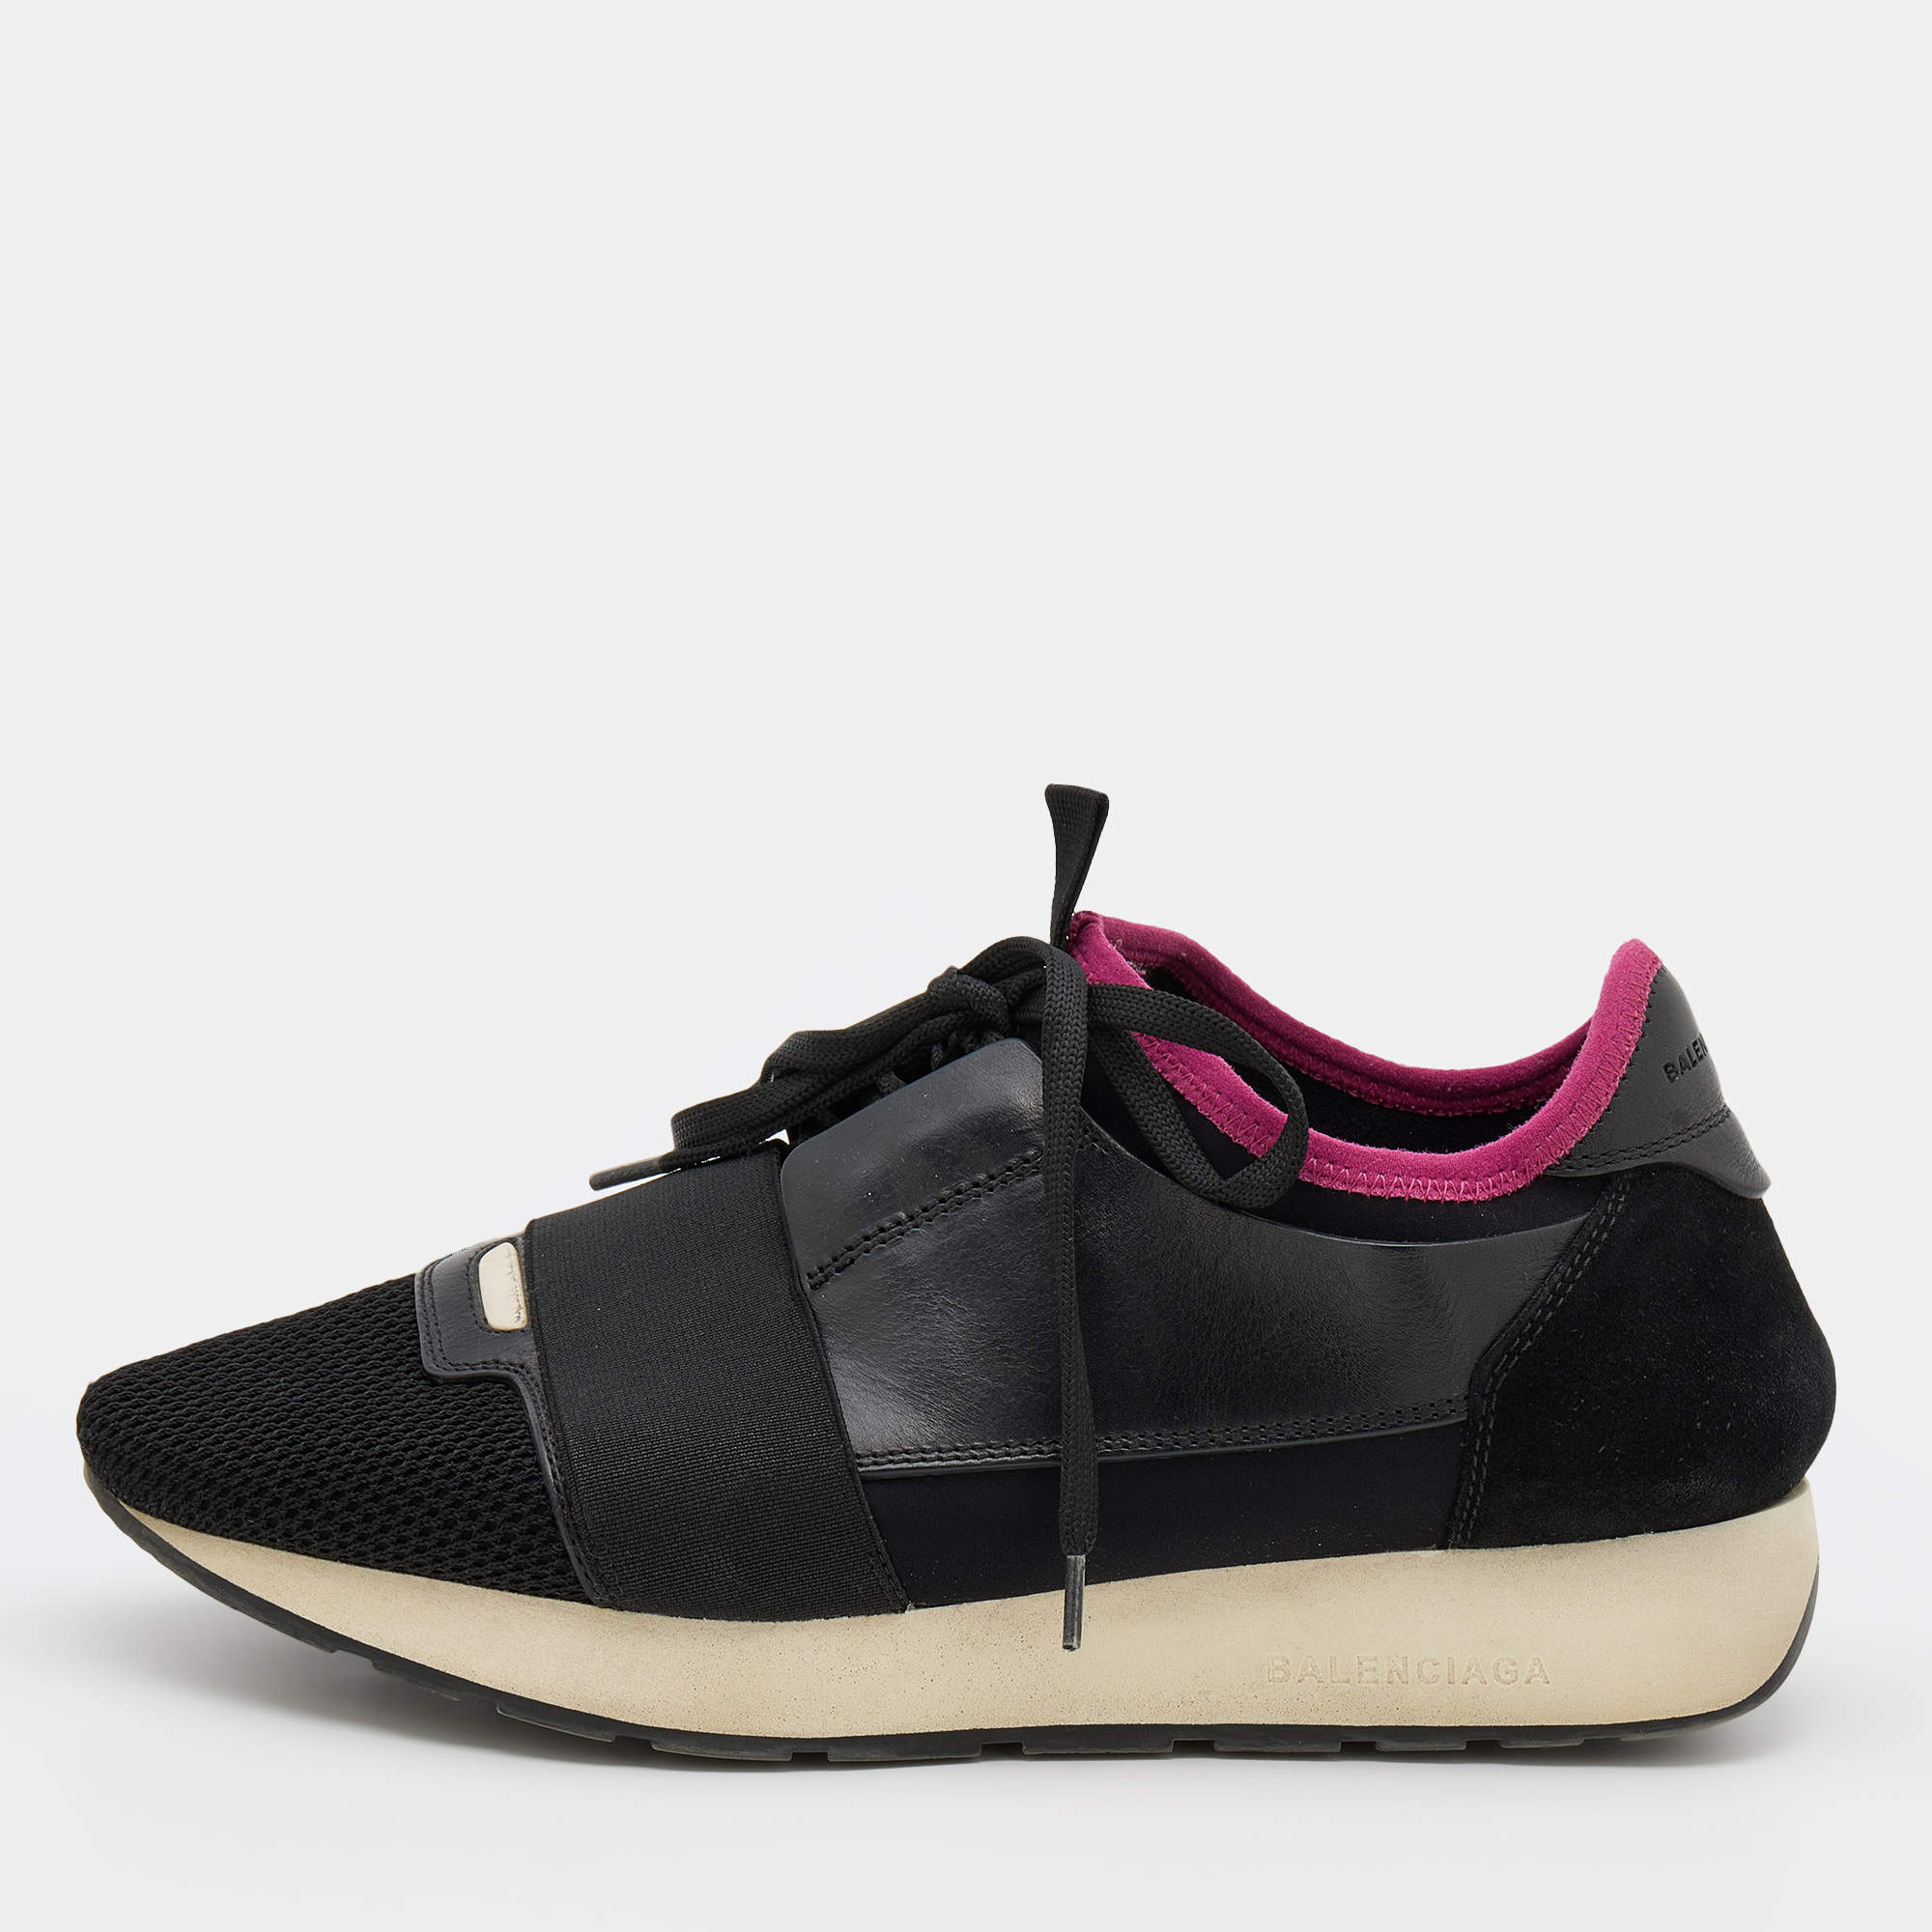 Balenciaga Black Mesh,Leather and Suede Runner Low Top Sneakers Size 38 Balenciaga